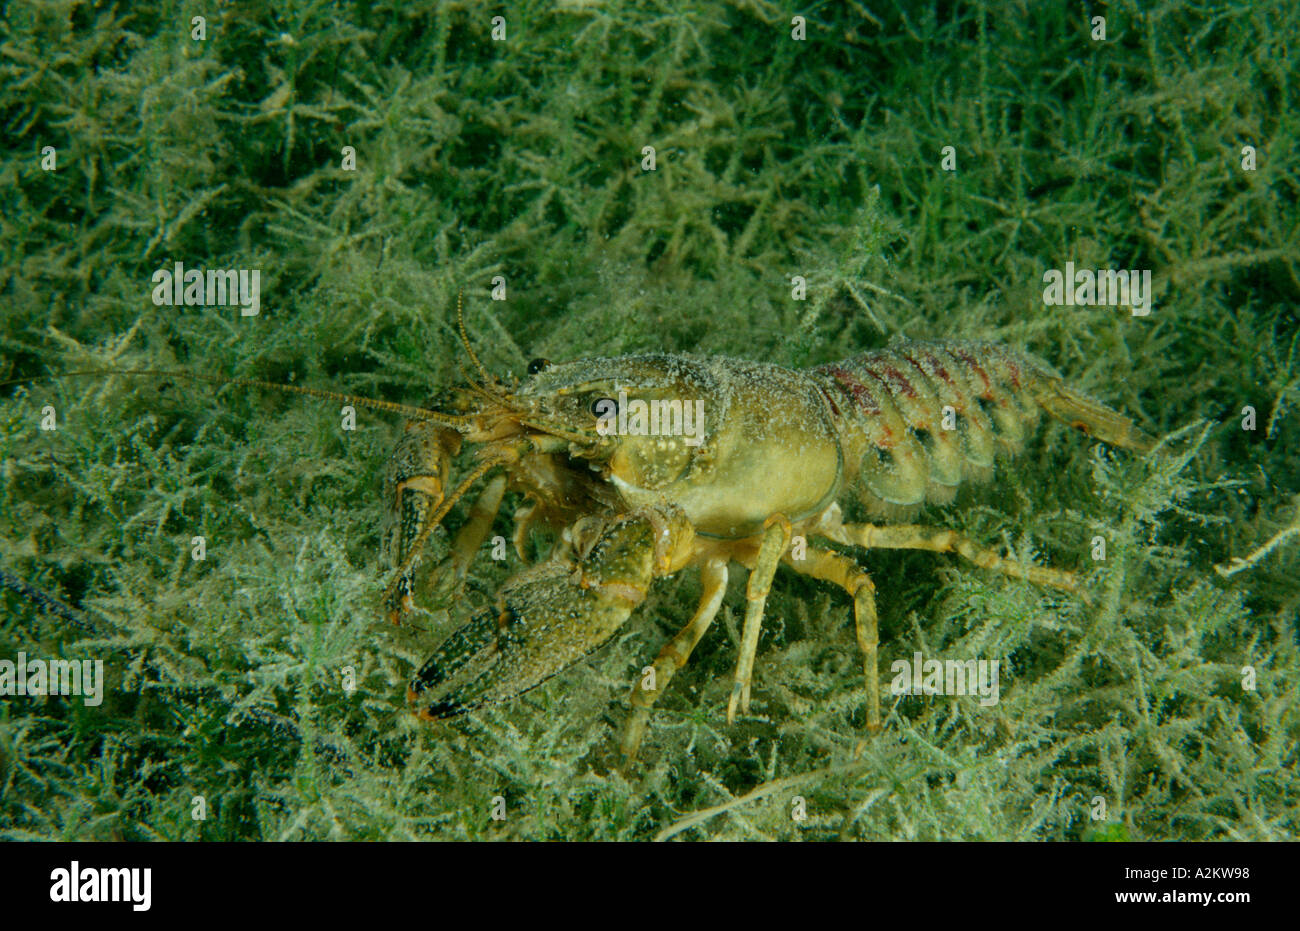 American river crayfish, Oronectes limosus, underwater Stock Photo